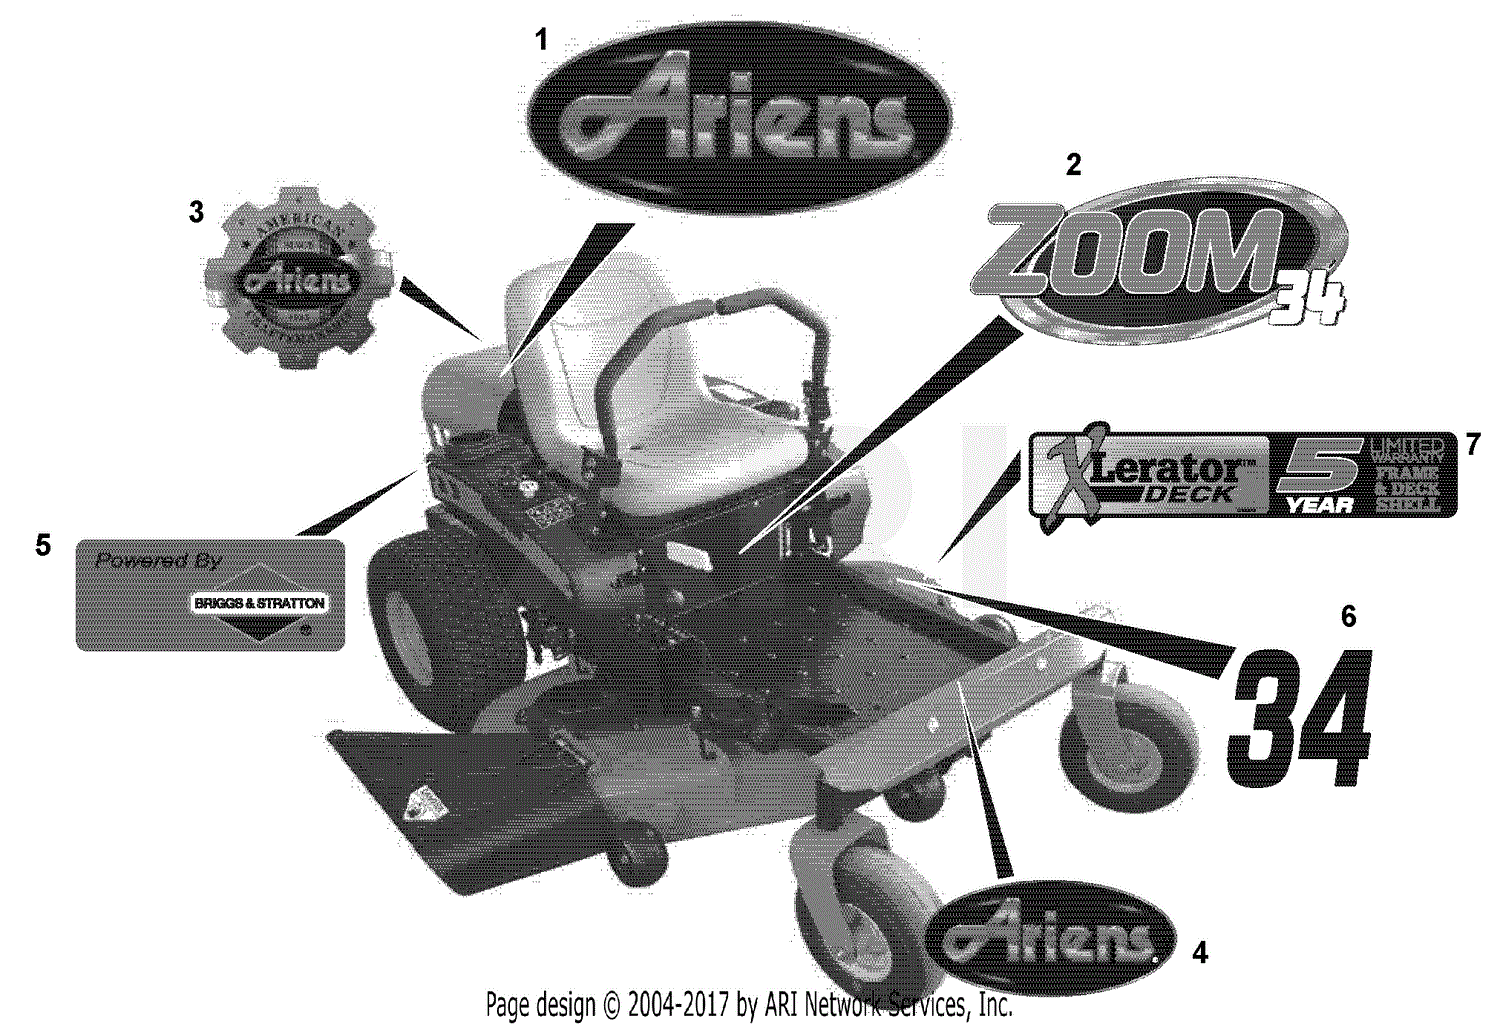 ariens zero turn mower manual model 915157